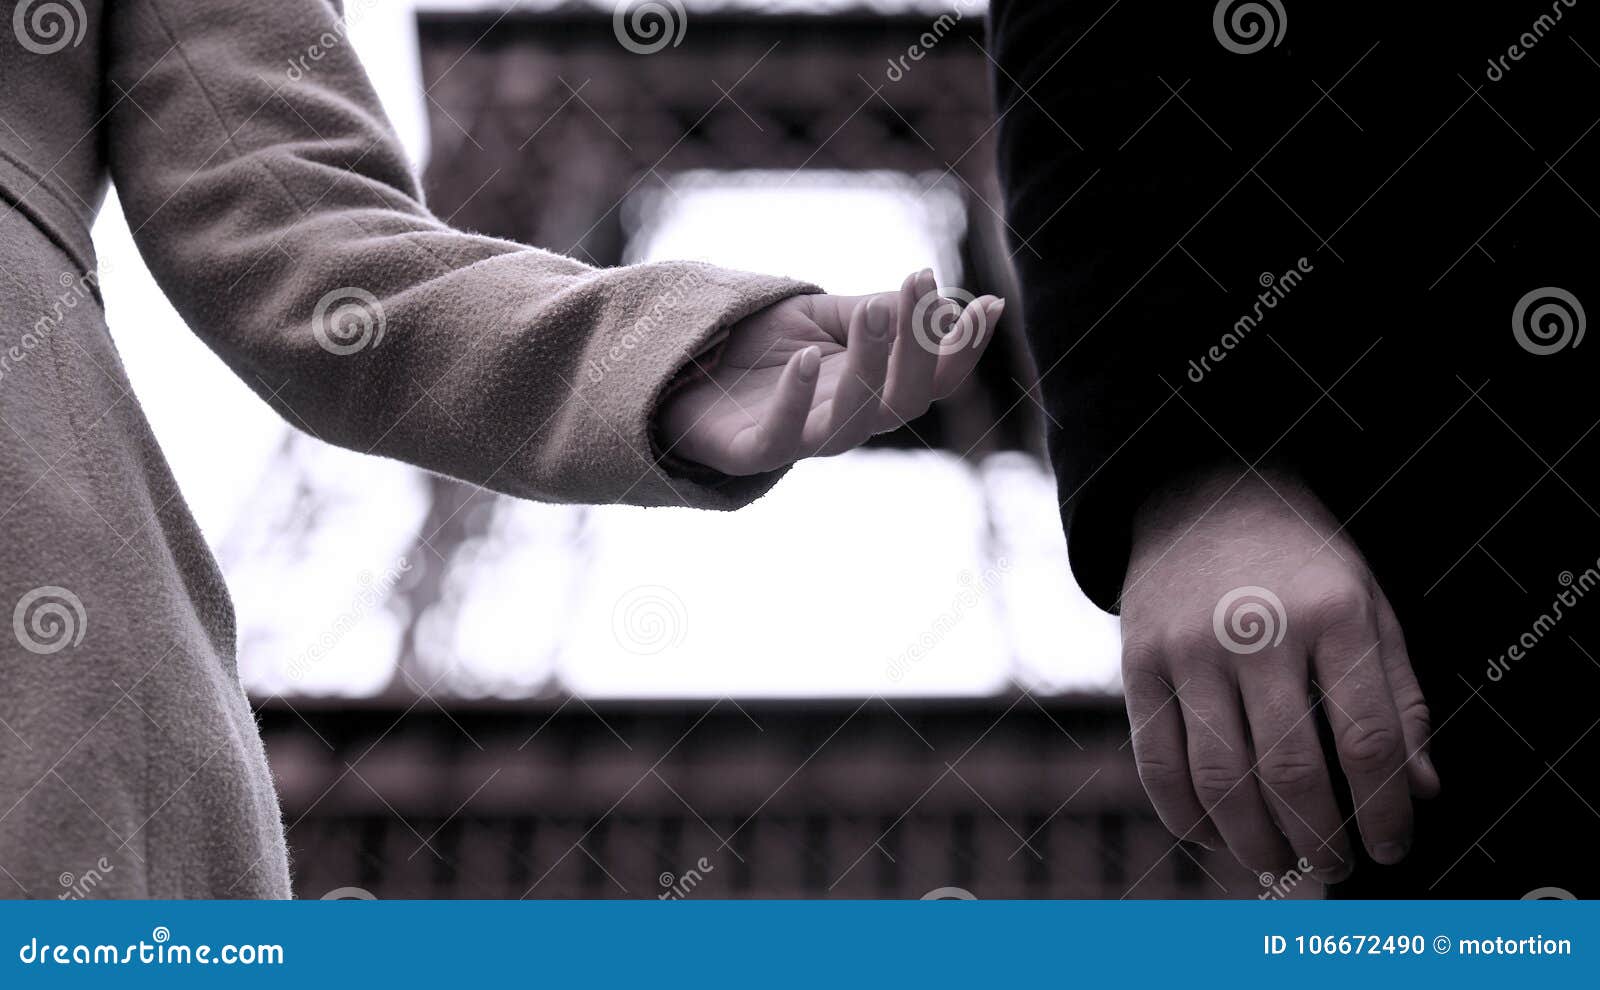 end of relationship between man and woman, hands of breakup couple, divorce